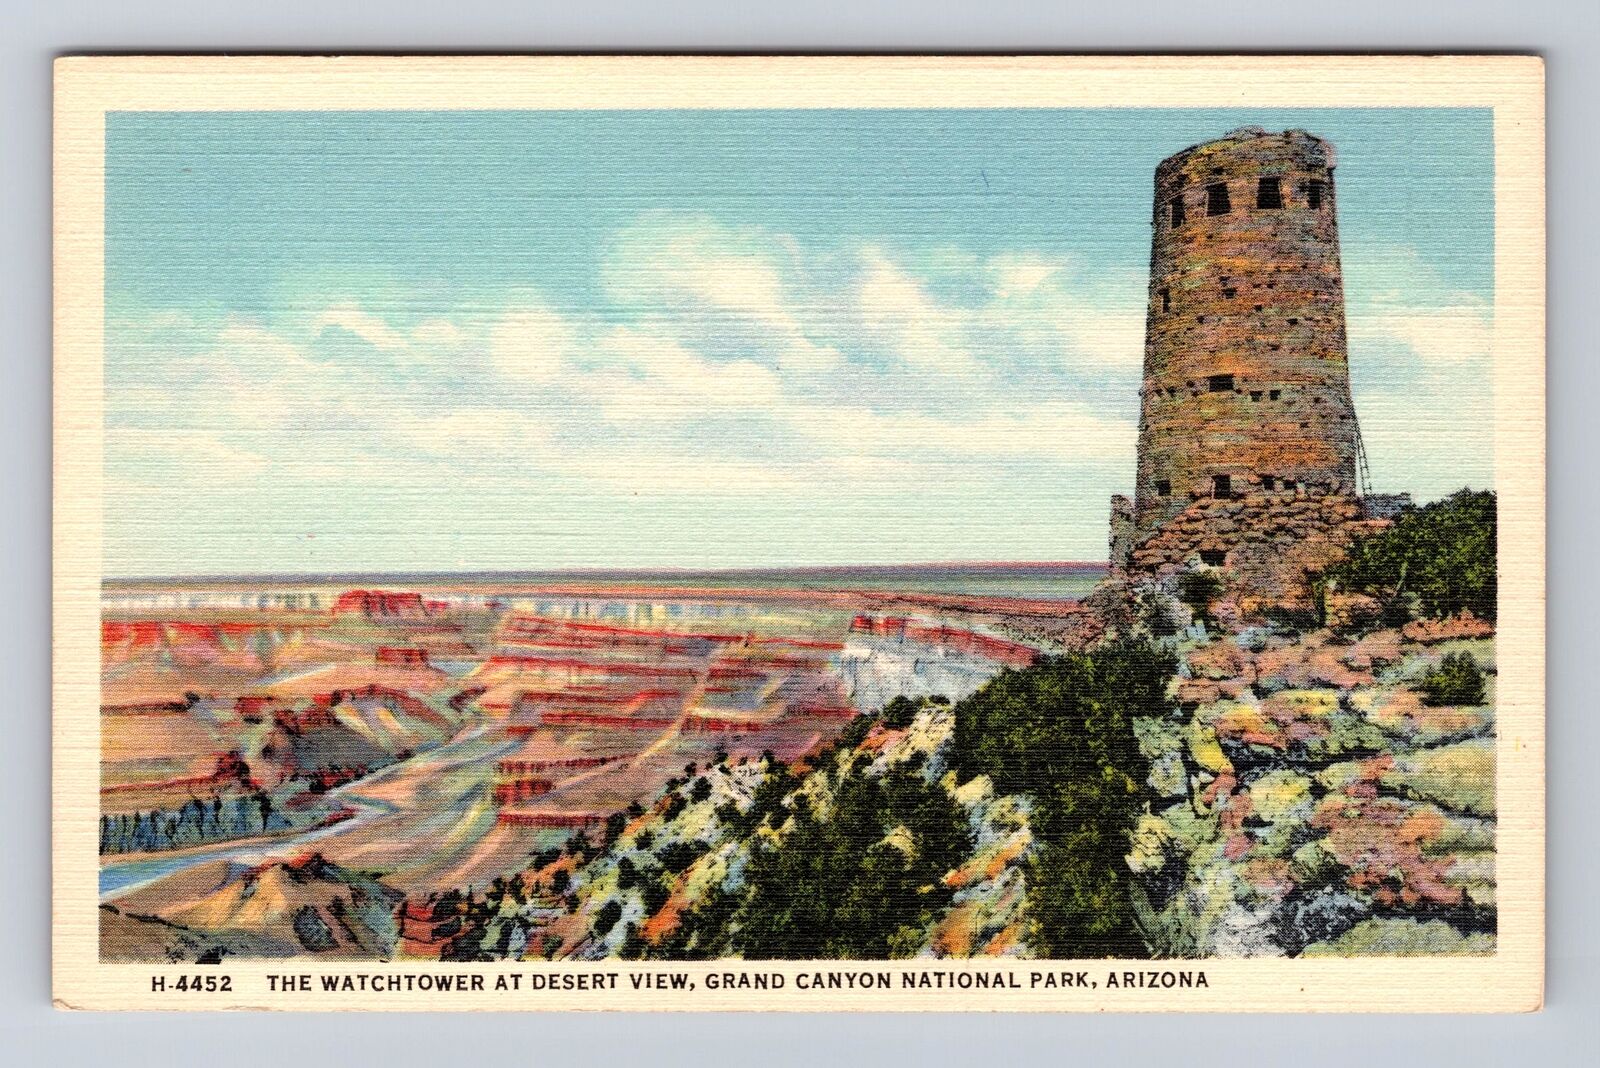 Grand Canyon National Park, Watchtower, Series #H-4452 Souvenir Vintage Postcard